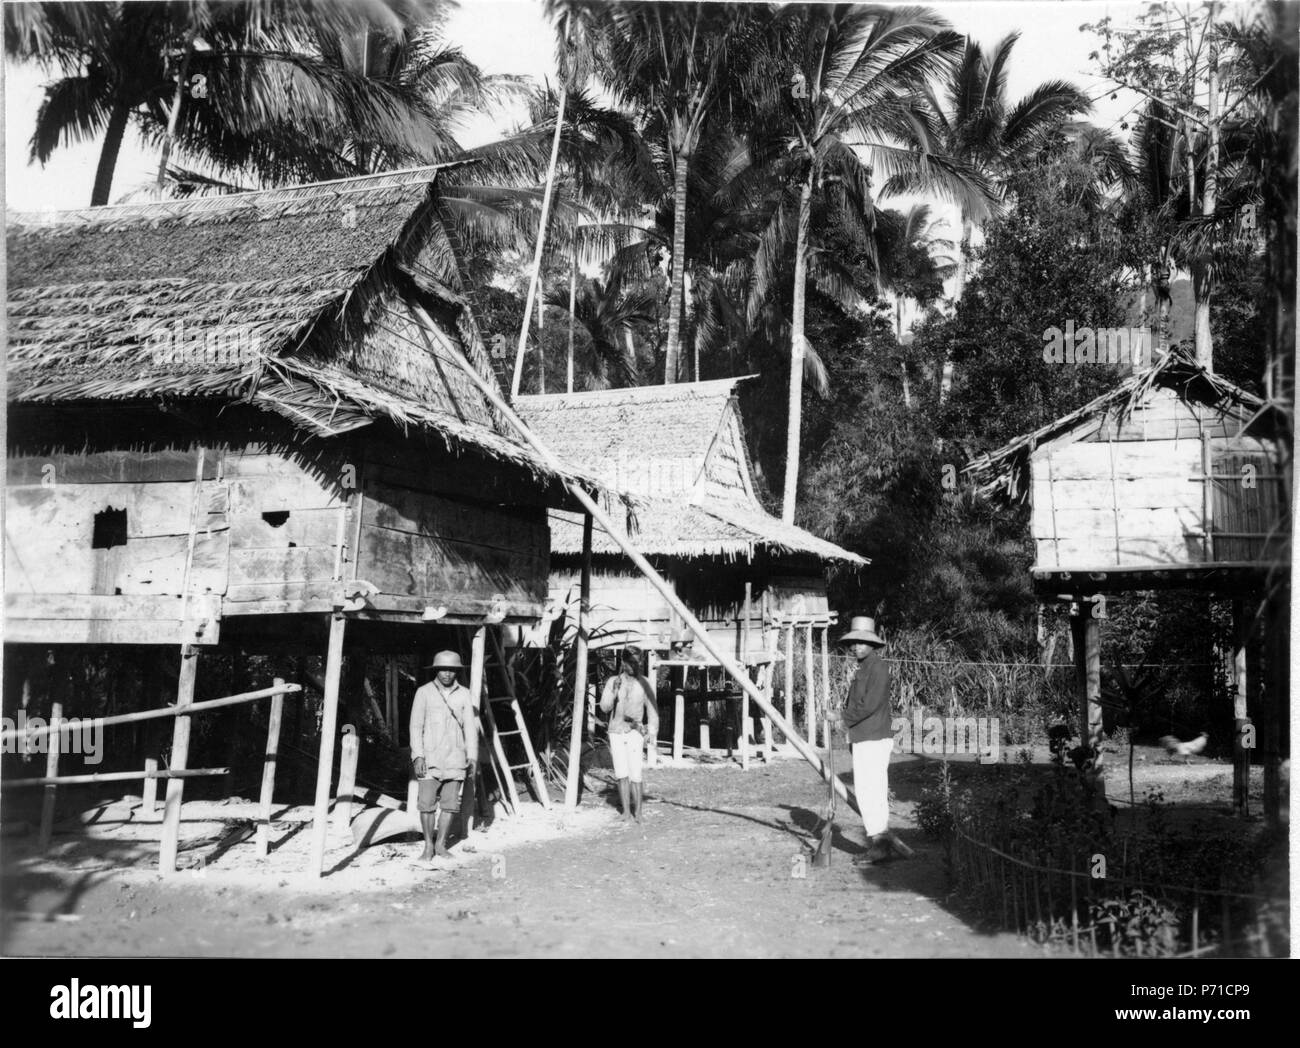 7 Byscen, t.v. två bostadshus, t.h. en risbod. Doohian. Indonesien - SMVK - 000188 Banque D'Images